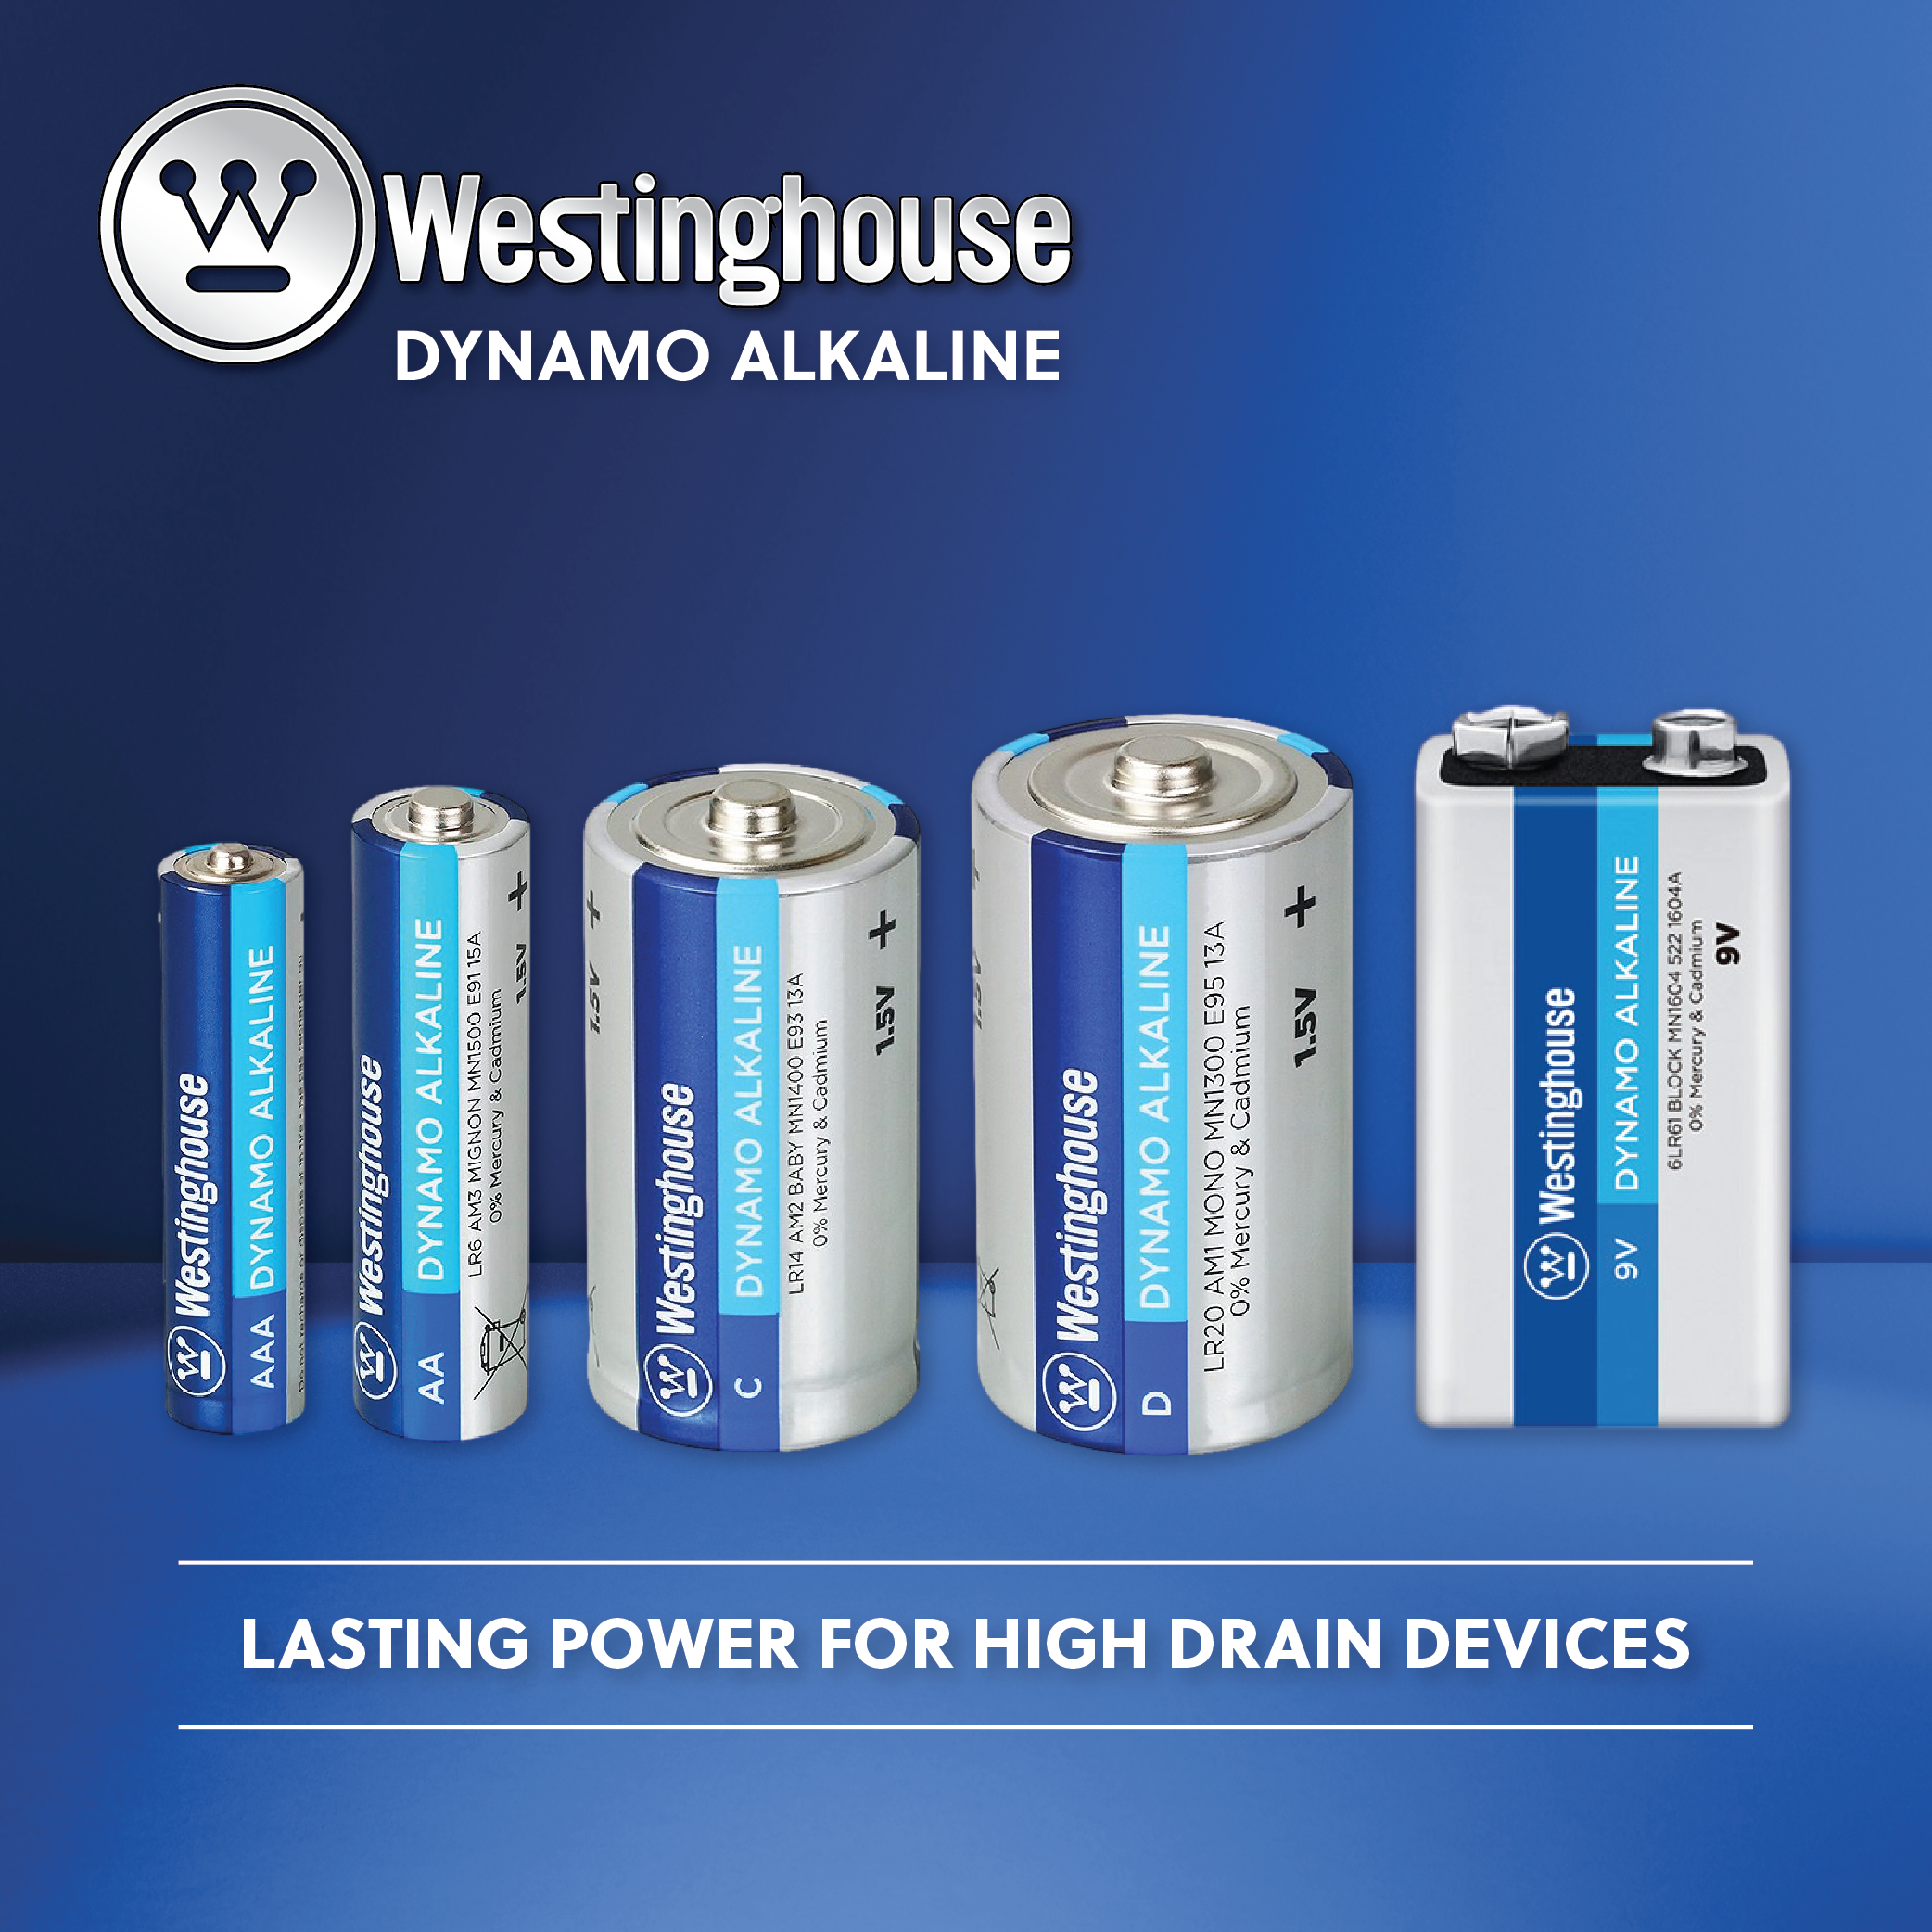 Westinghouse AAA Dynamo Alkaline Plastic Tub of 24